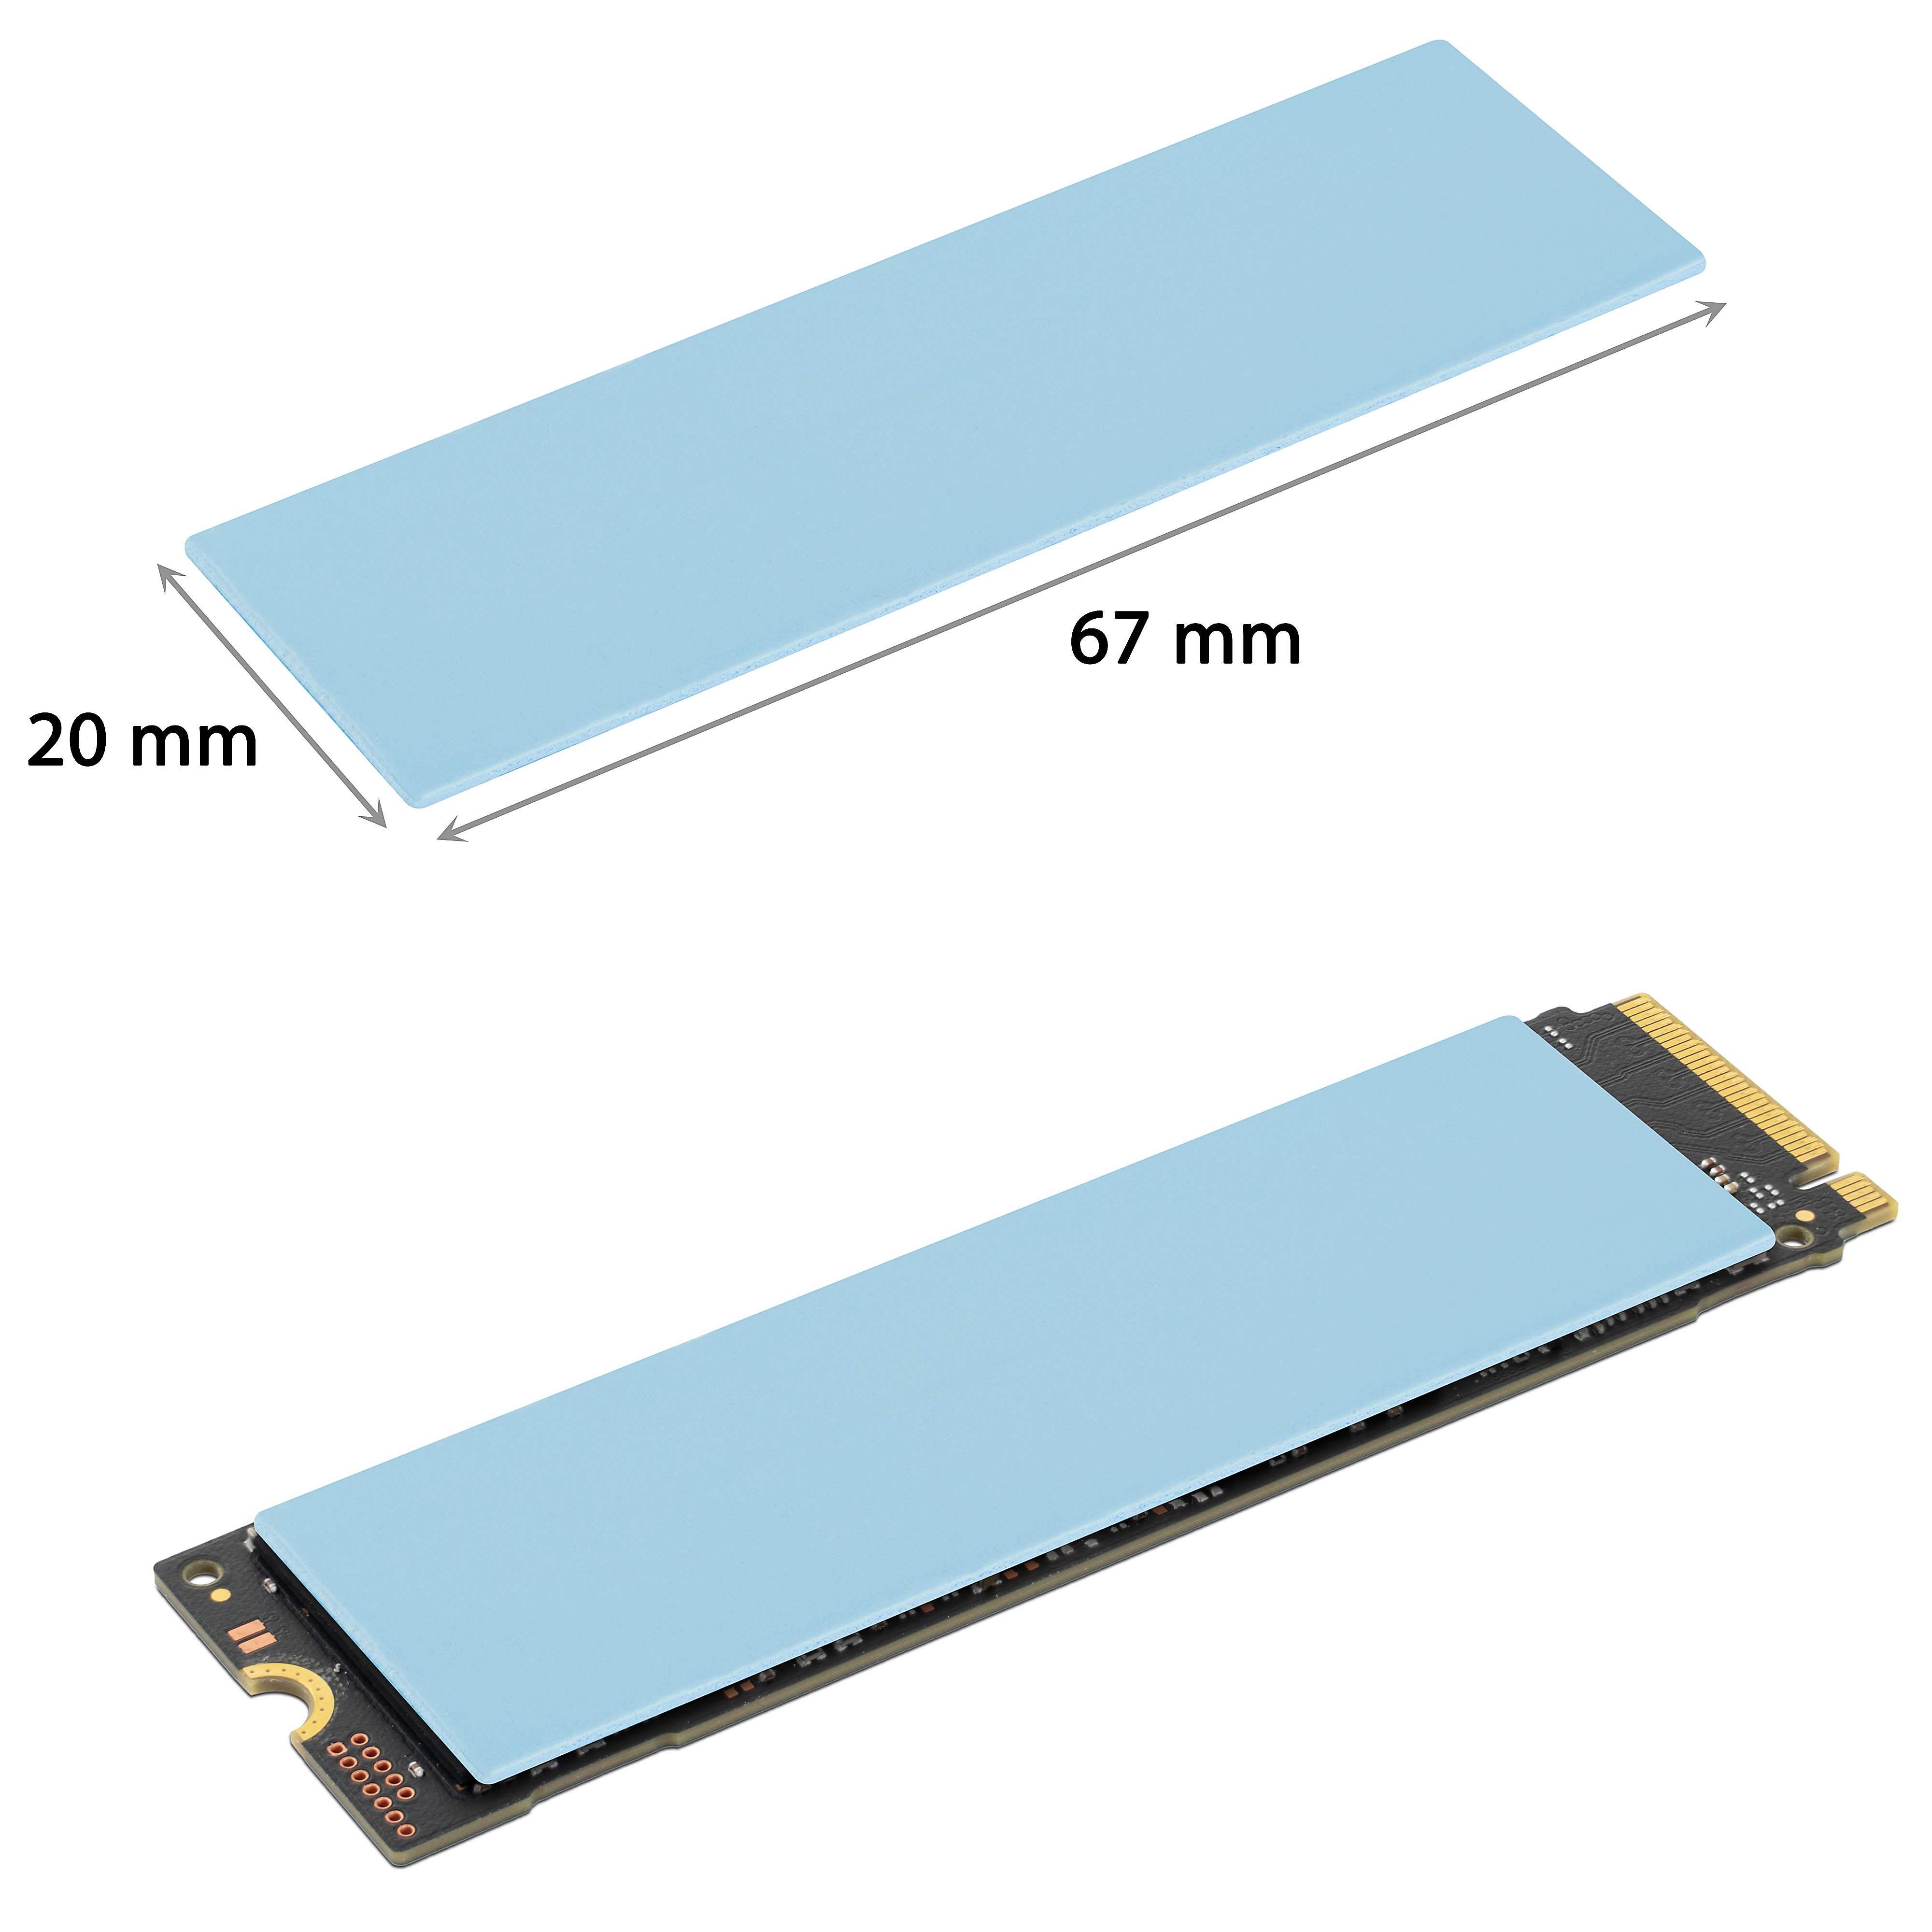 12 Wärmeleitpads (je 4x 0,5 mm/1,0 mm/1,5 mm) für M.2 SSD